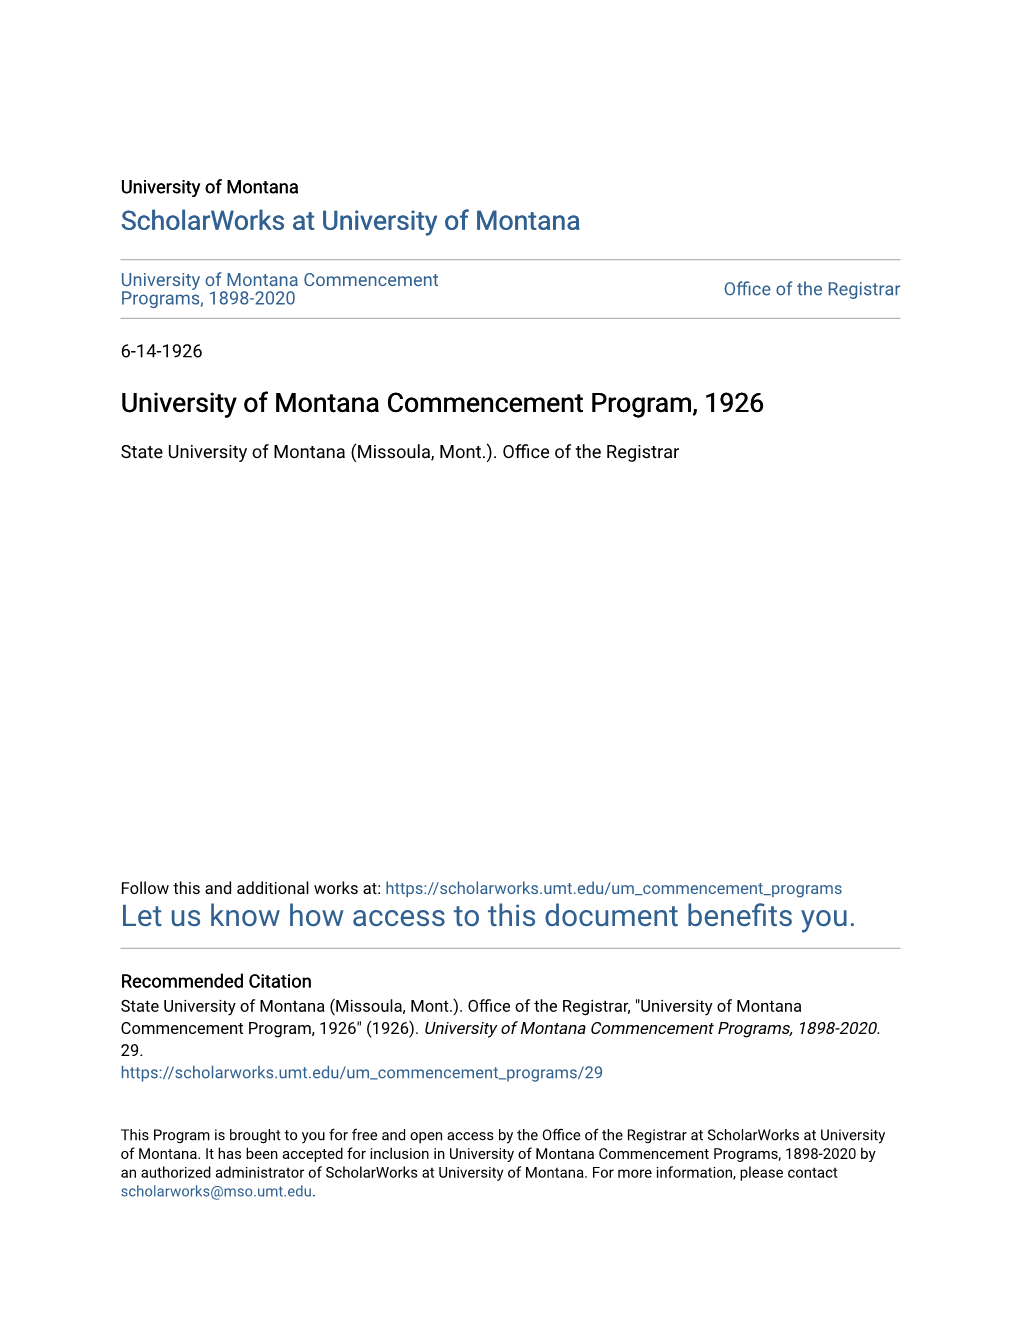 University of Montana Commencement Program, 1926